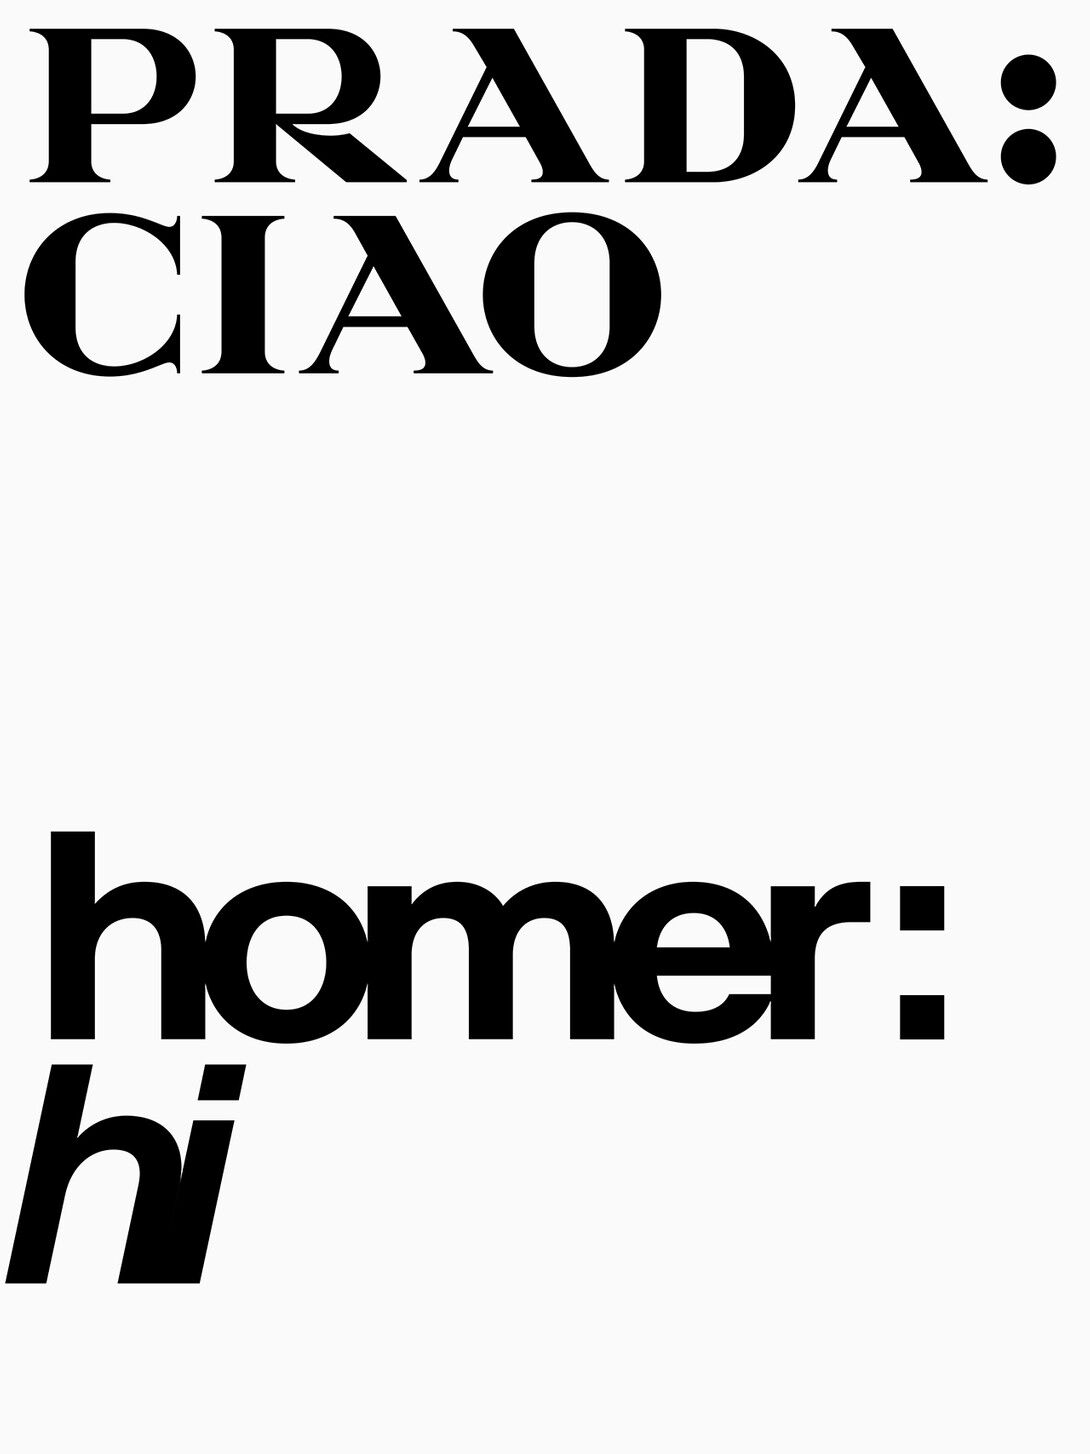 Homer Prada